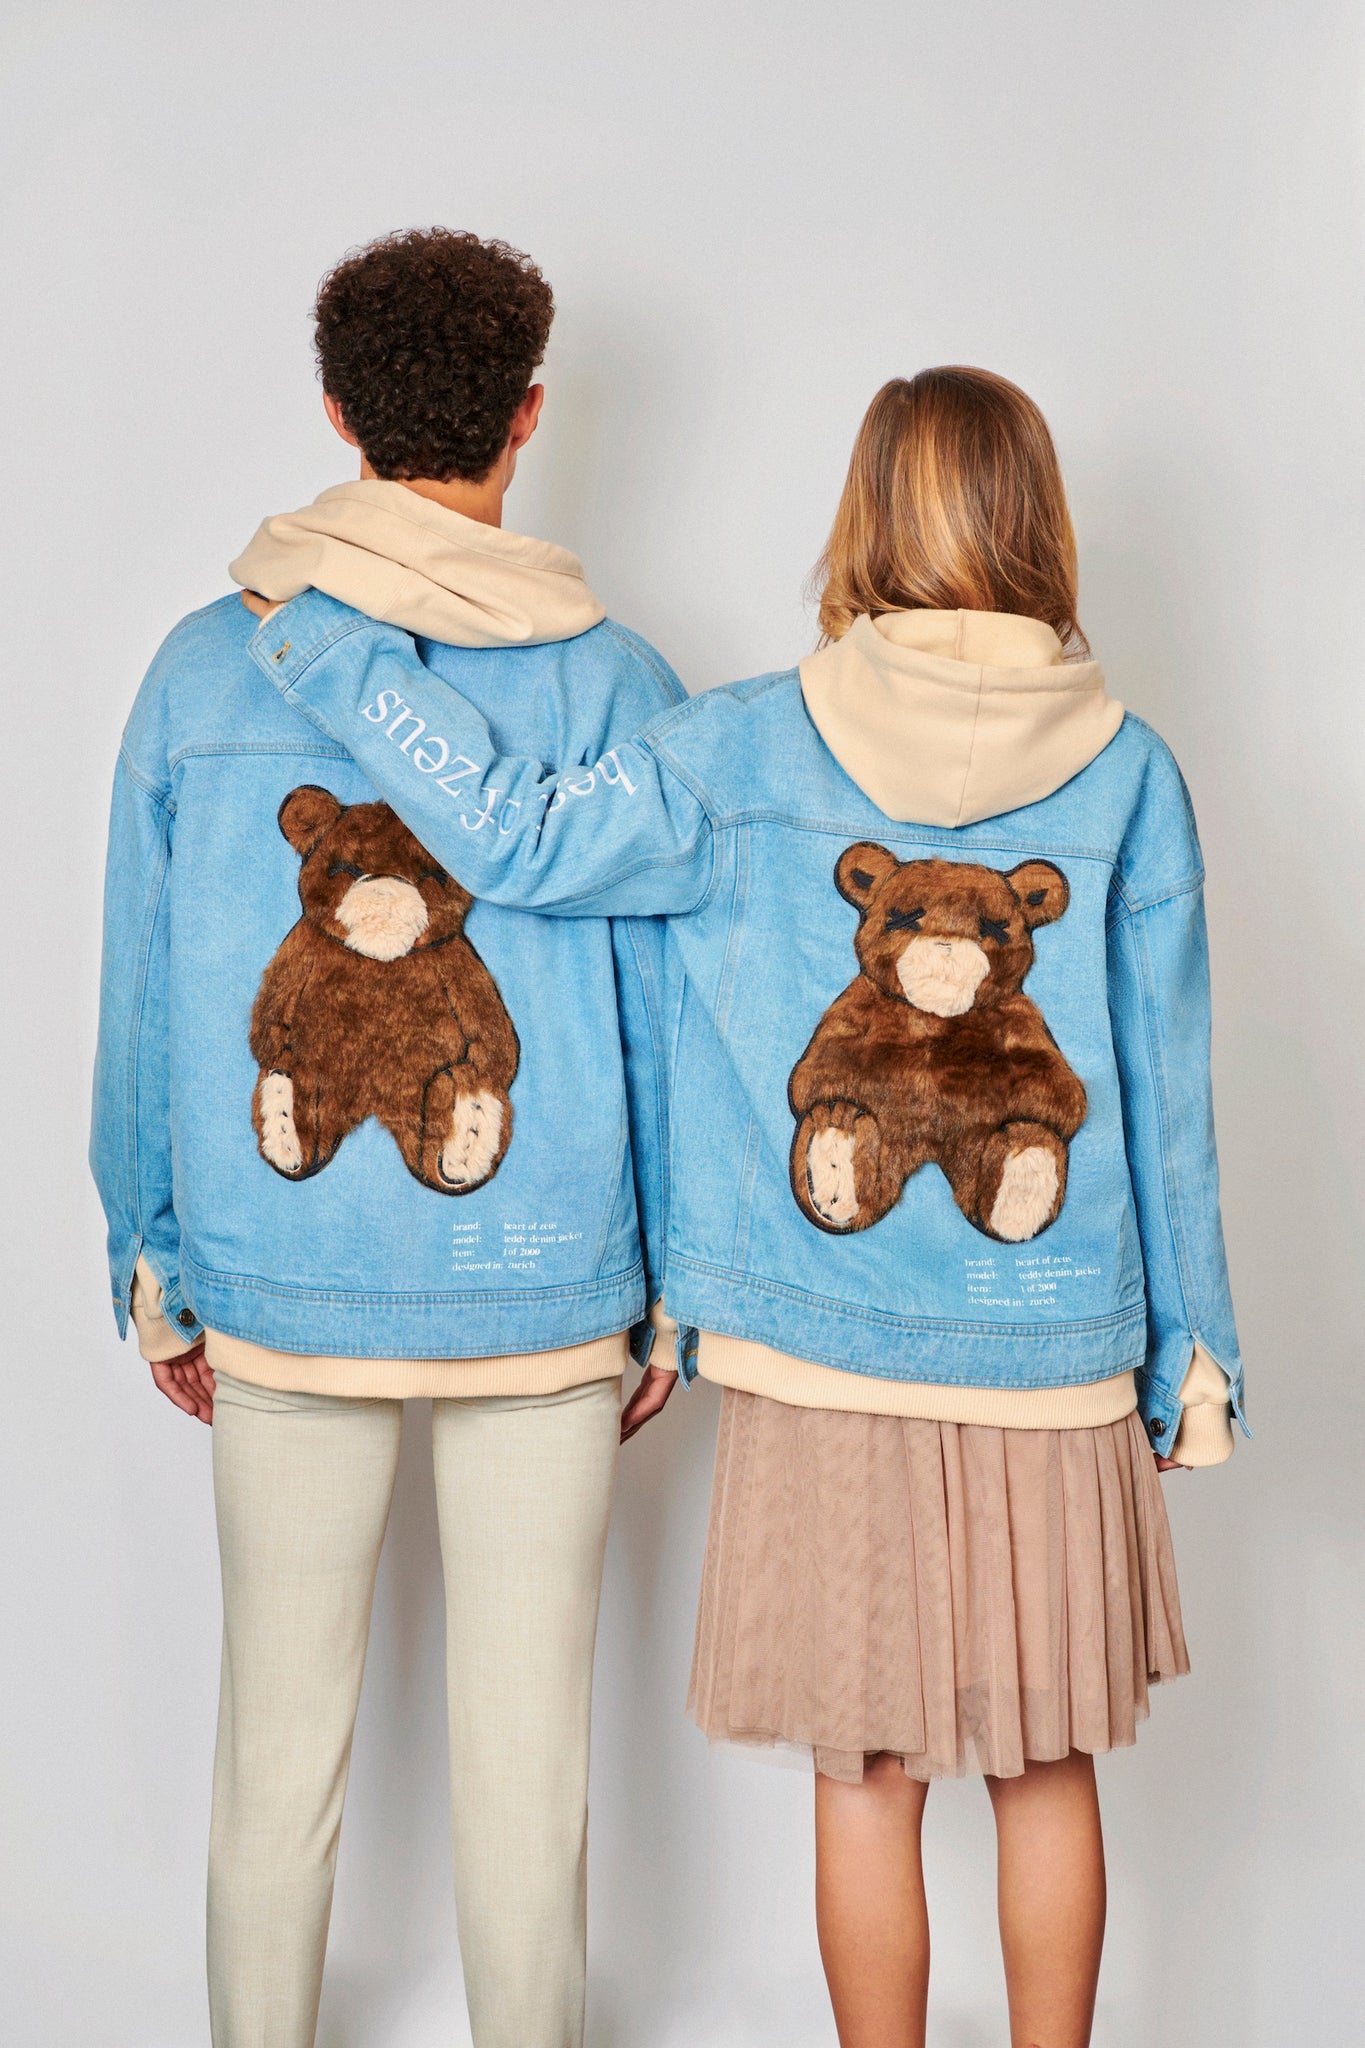 Teddy Bear Denim Jacket PDF Pattern Fits 15-18 Inch Teddy Bears Such as  Build a Bear. Teddy Bear Clothes Sewing Pattern Tutorial - Etsy